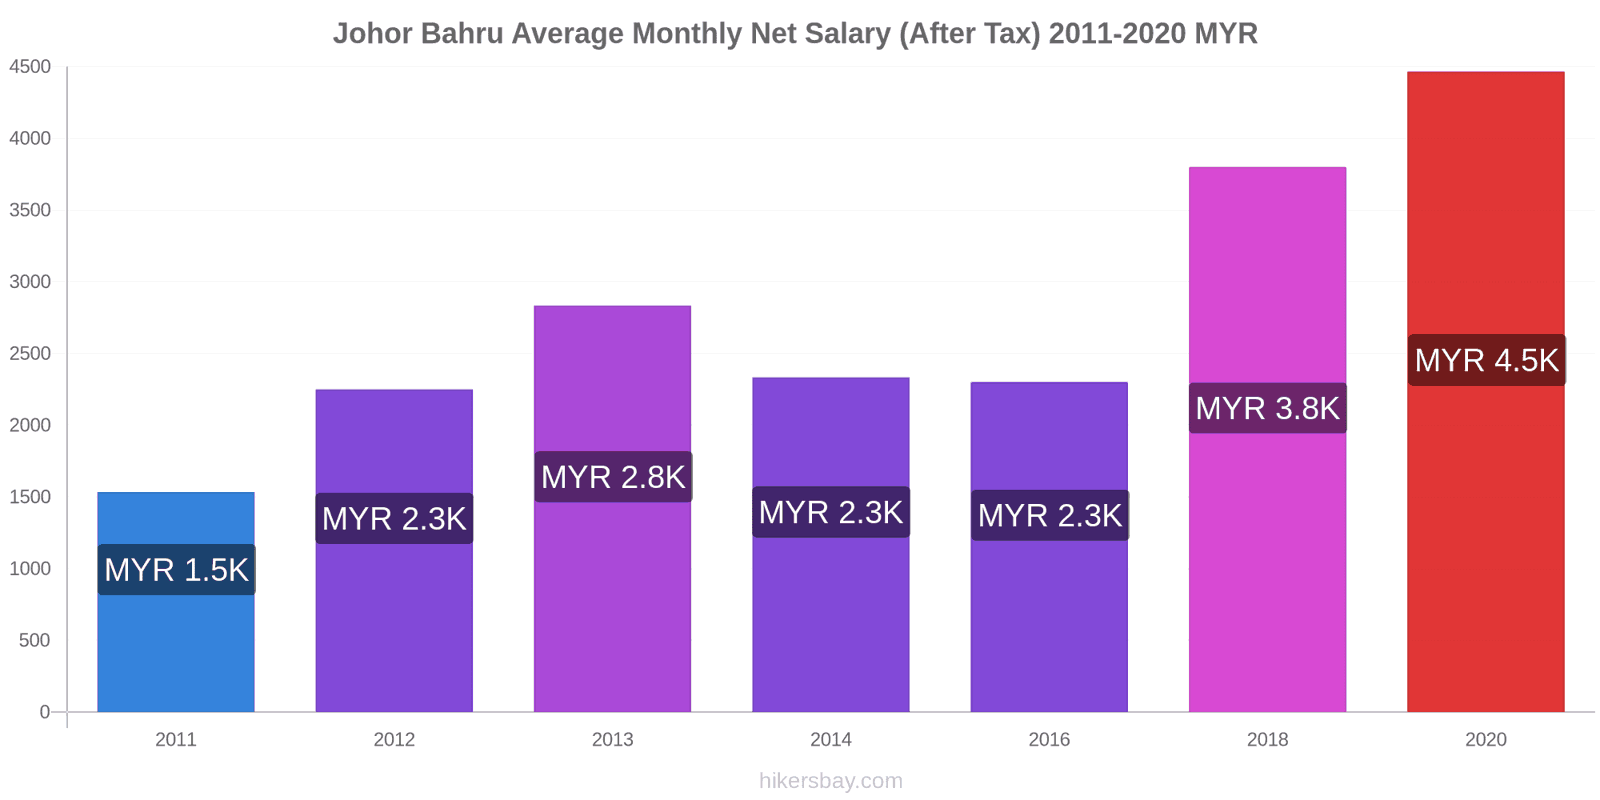 Johor Bahru price changes Average Monthly Net Salary (After Tax) hikersbay.com